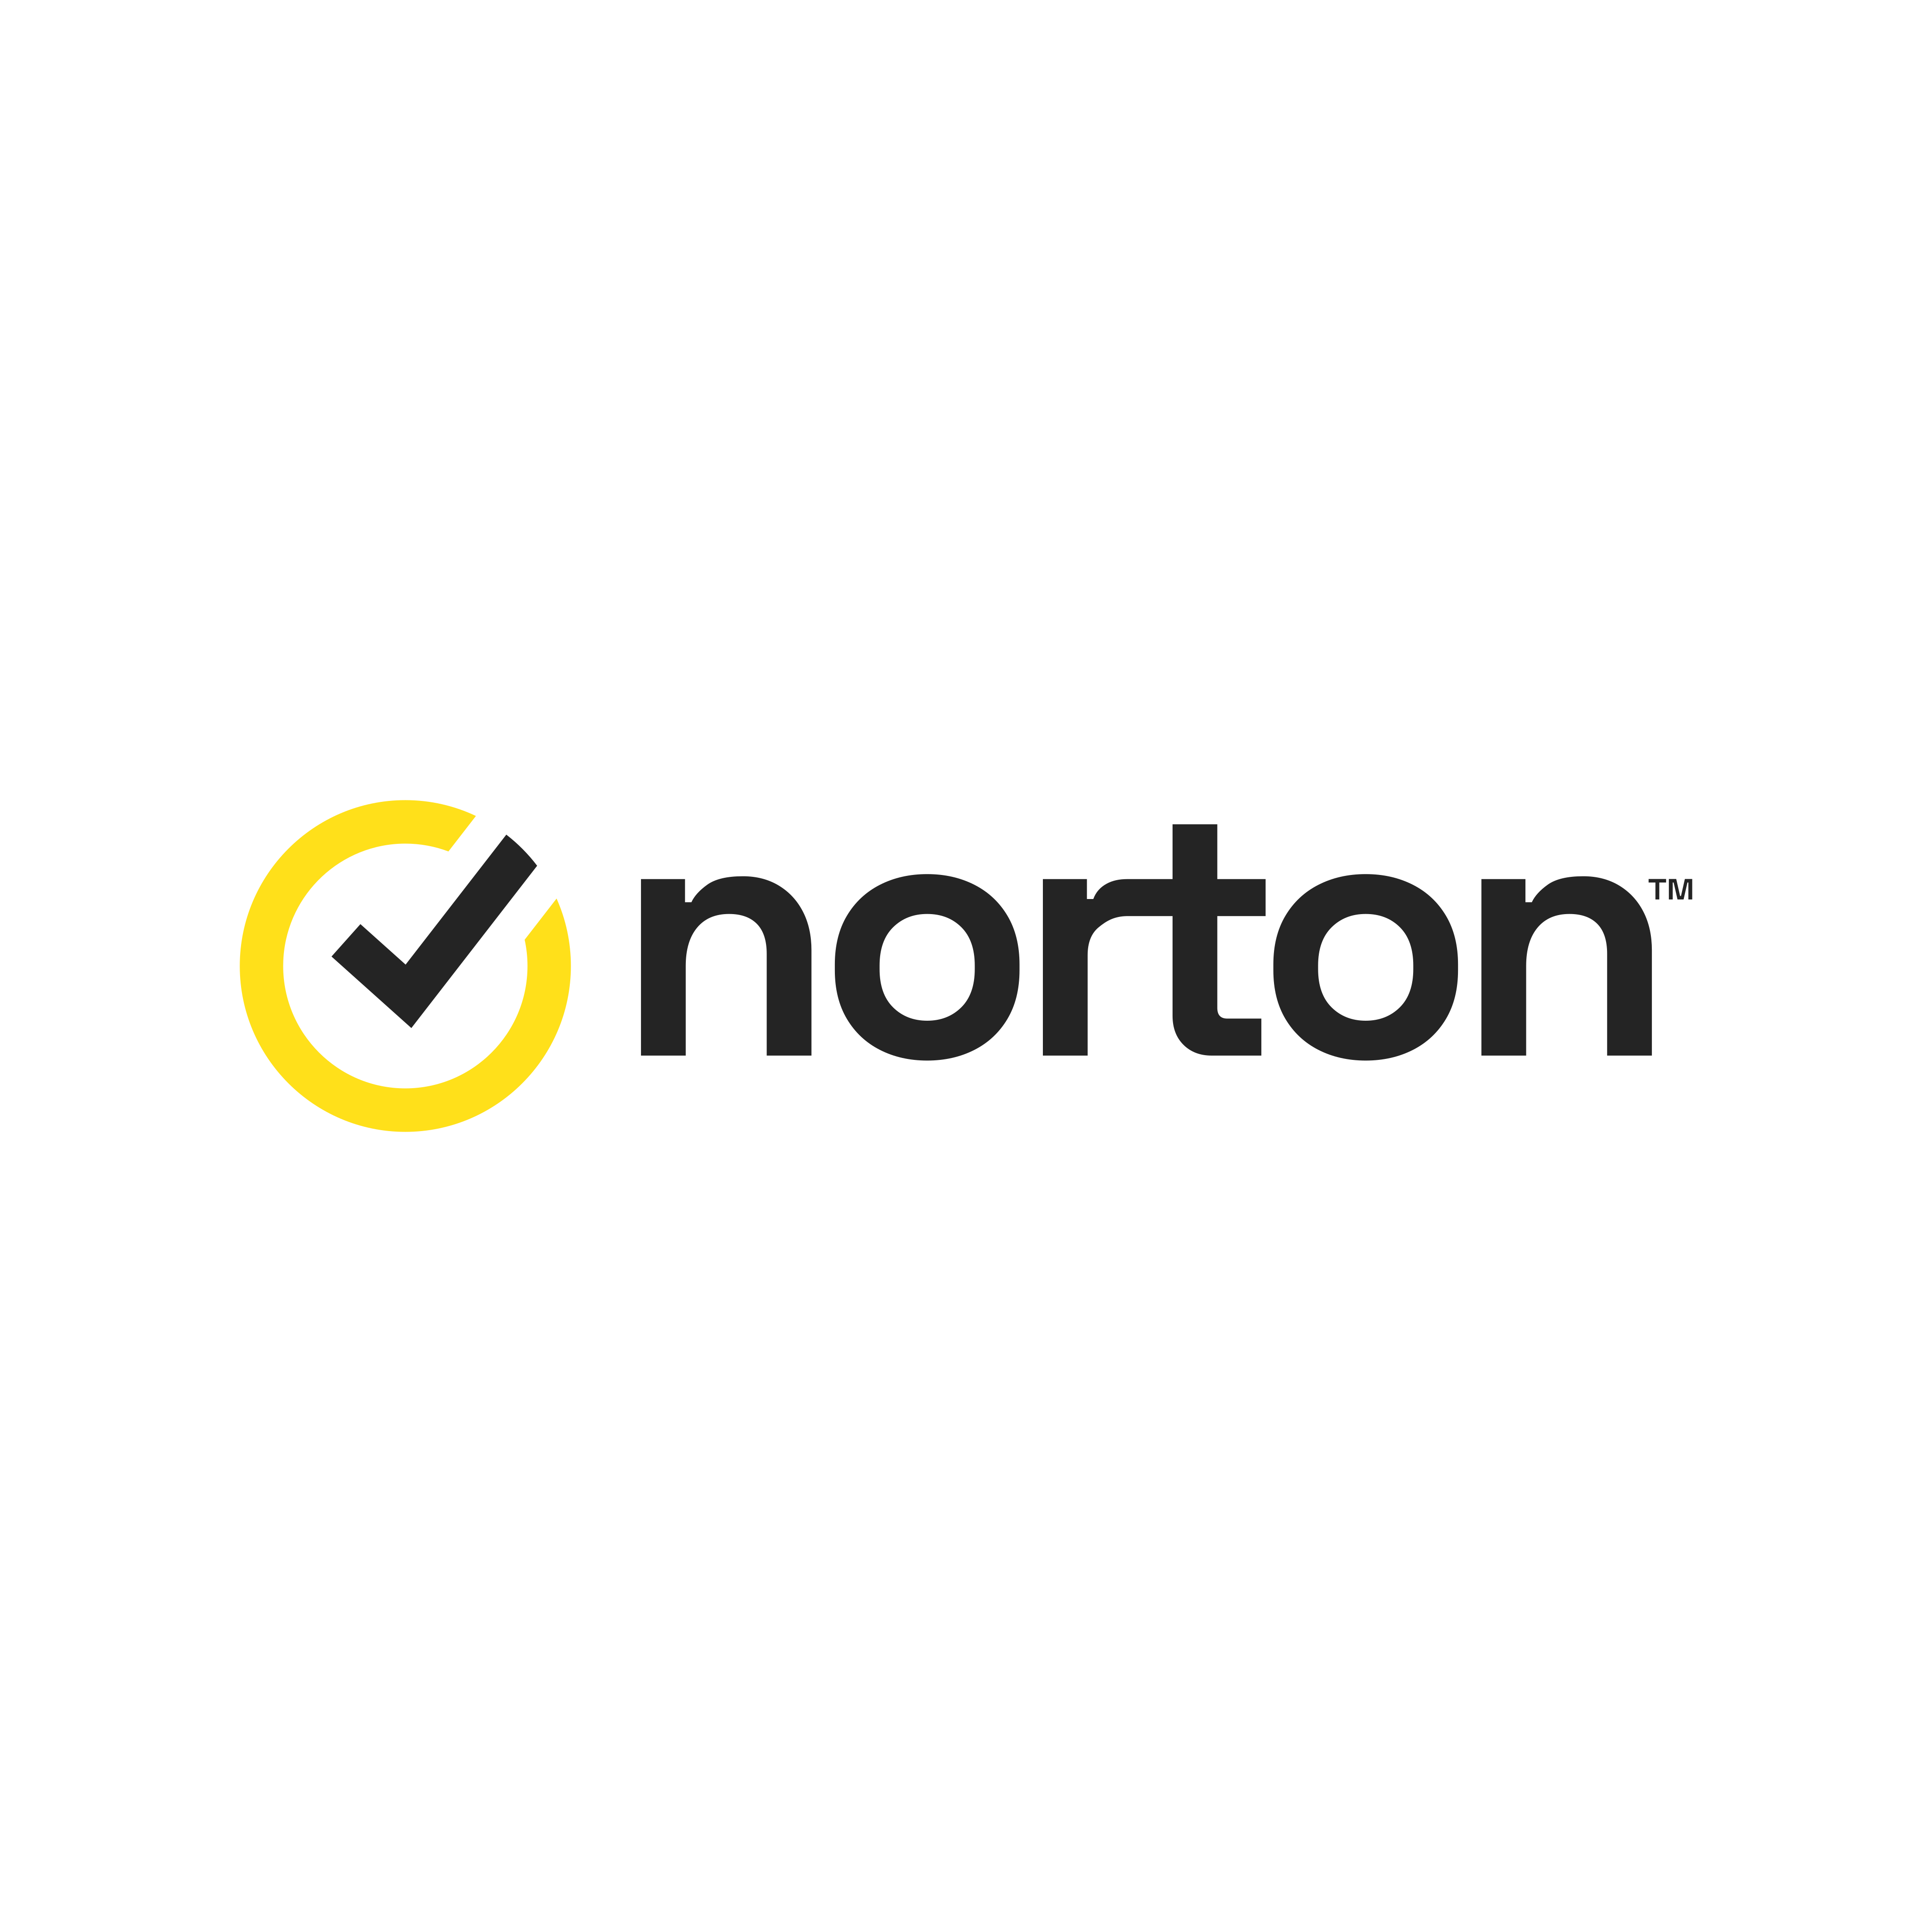 norton logo 0 - Norton Logo